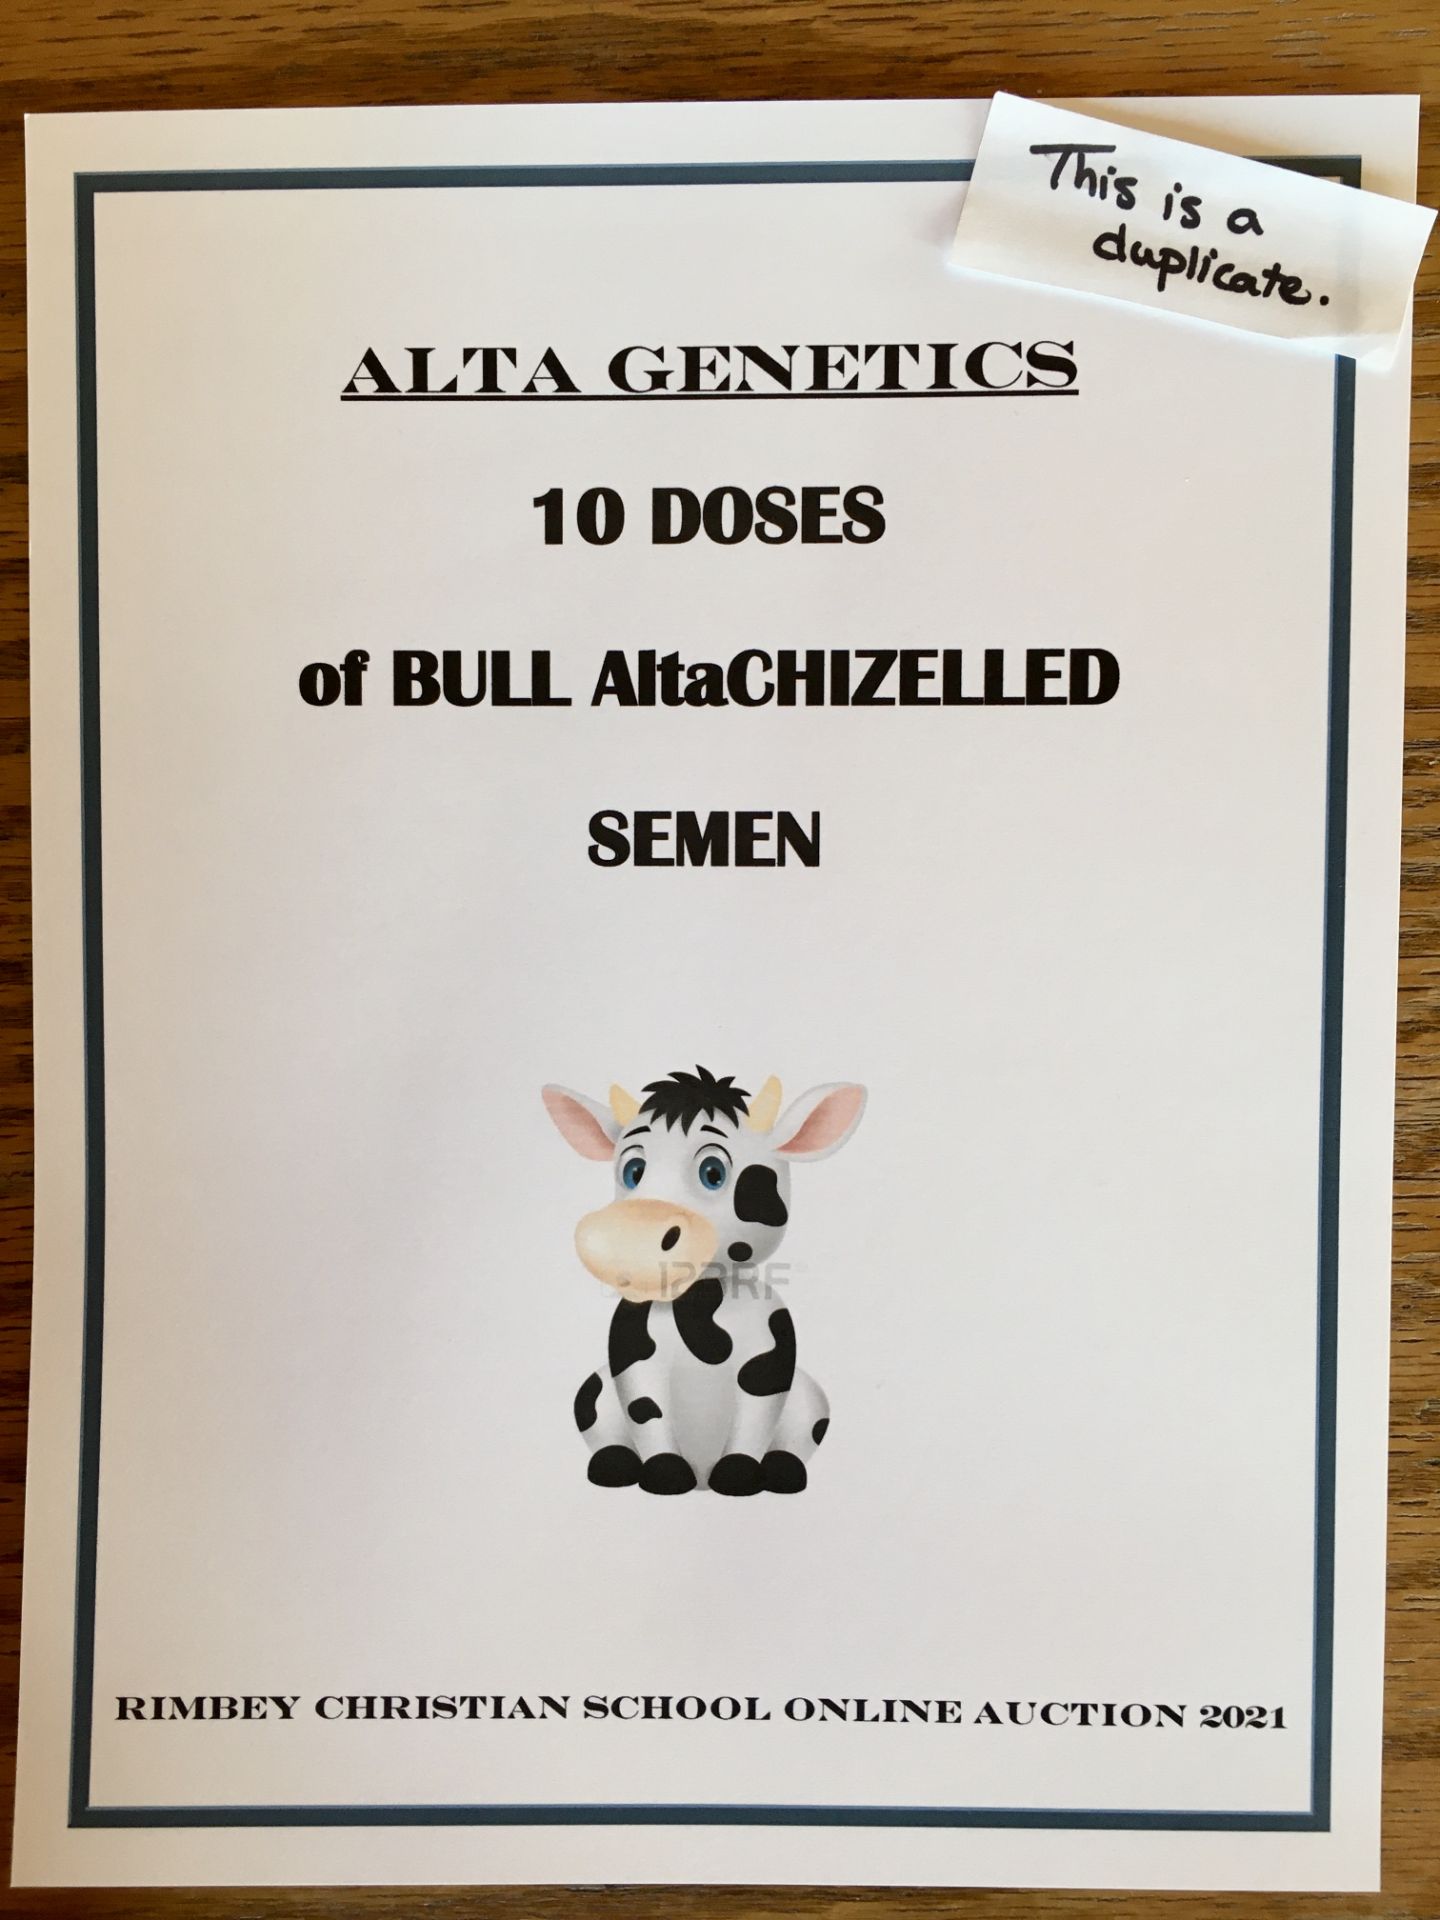 ALTA GENETICS GIFT CERTIFICATE: 10 DOSES OF 'AltaCHIZELLED' BULL SEMEN altaChizelled was born - Image 2 of 3